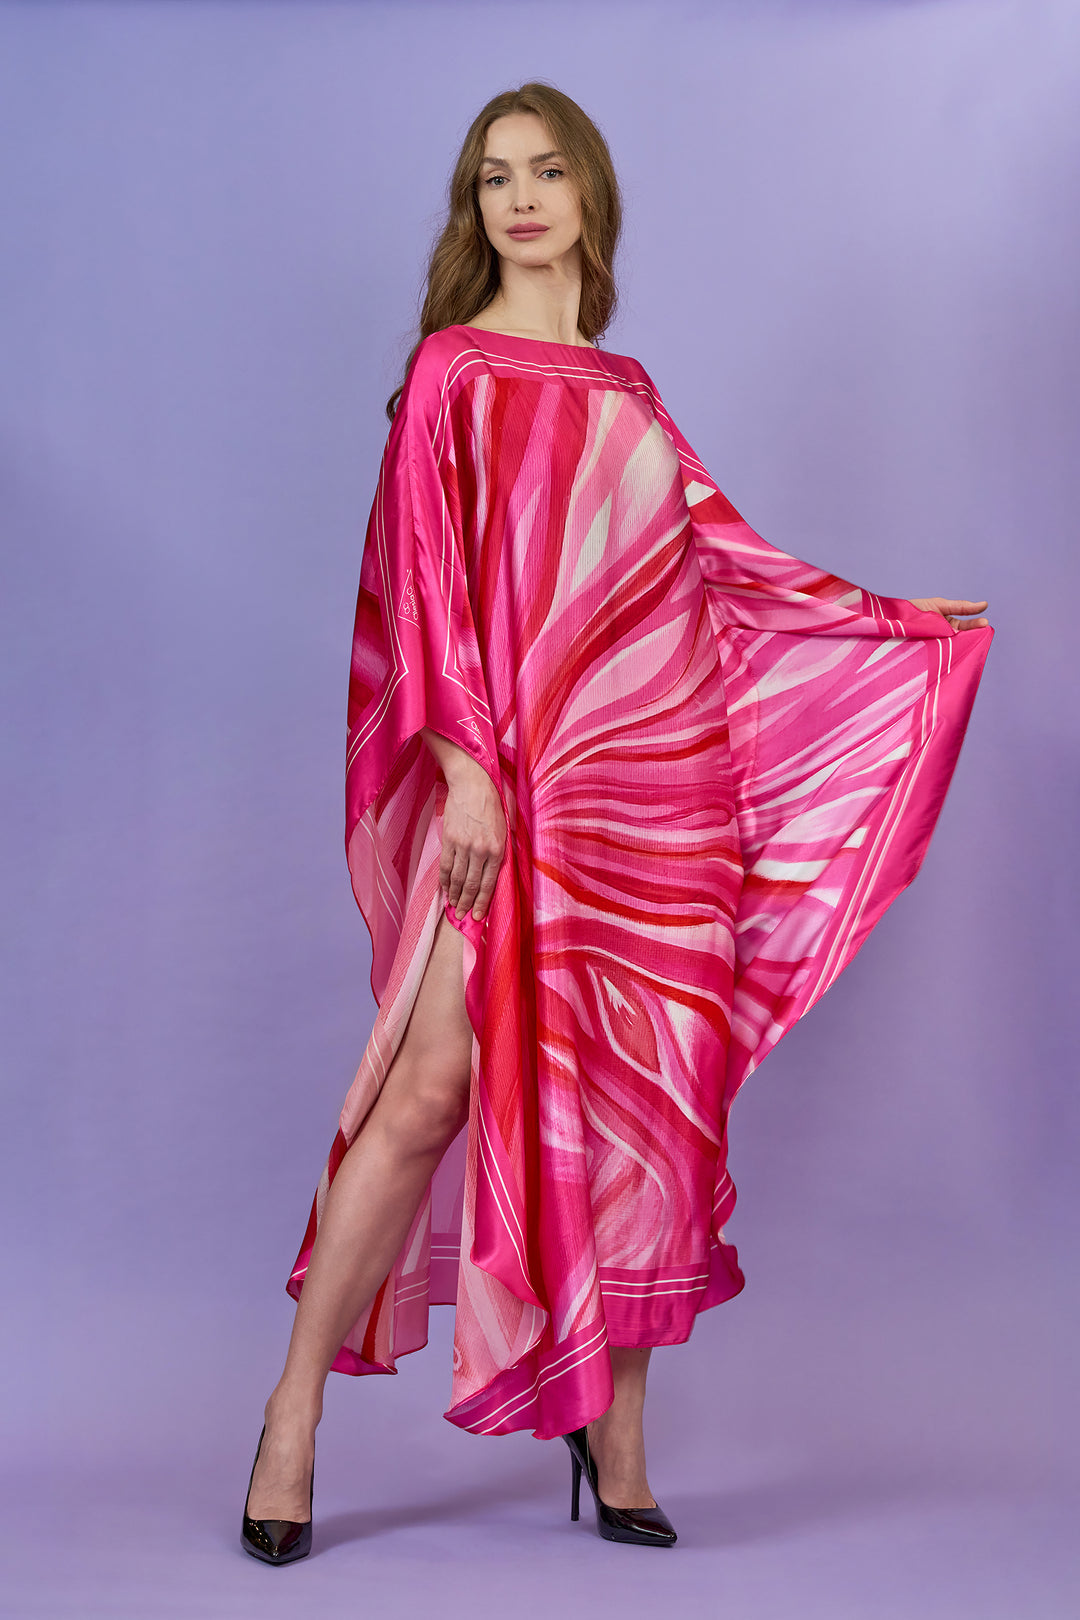 Designer Alesia C. PINK LOVE 100% Silk Charmeuse Maxi Caftan Dress in Pink Blush, Styled. AlesiaC.com